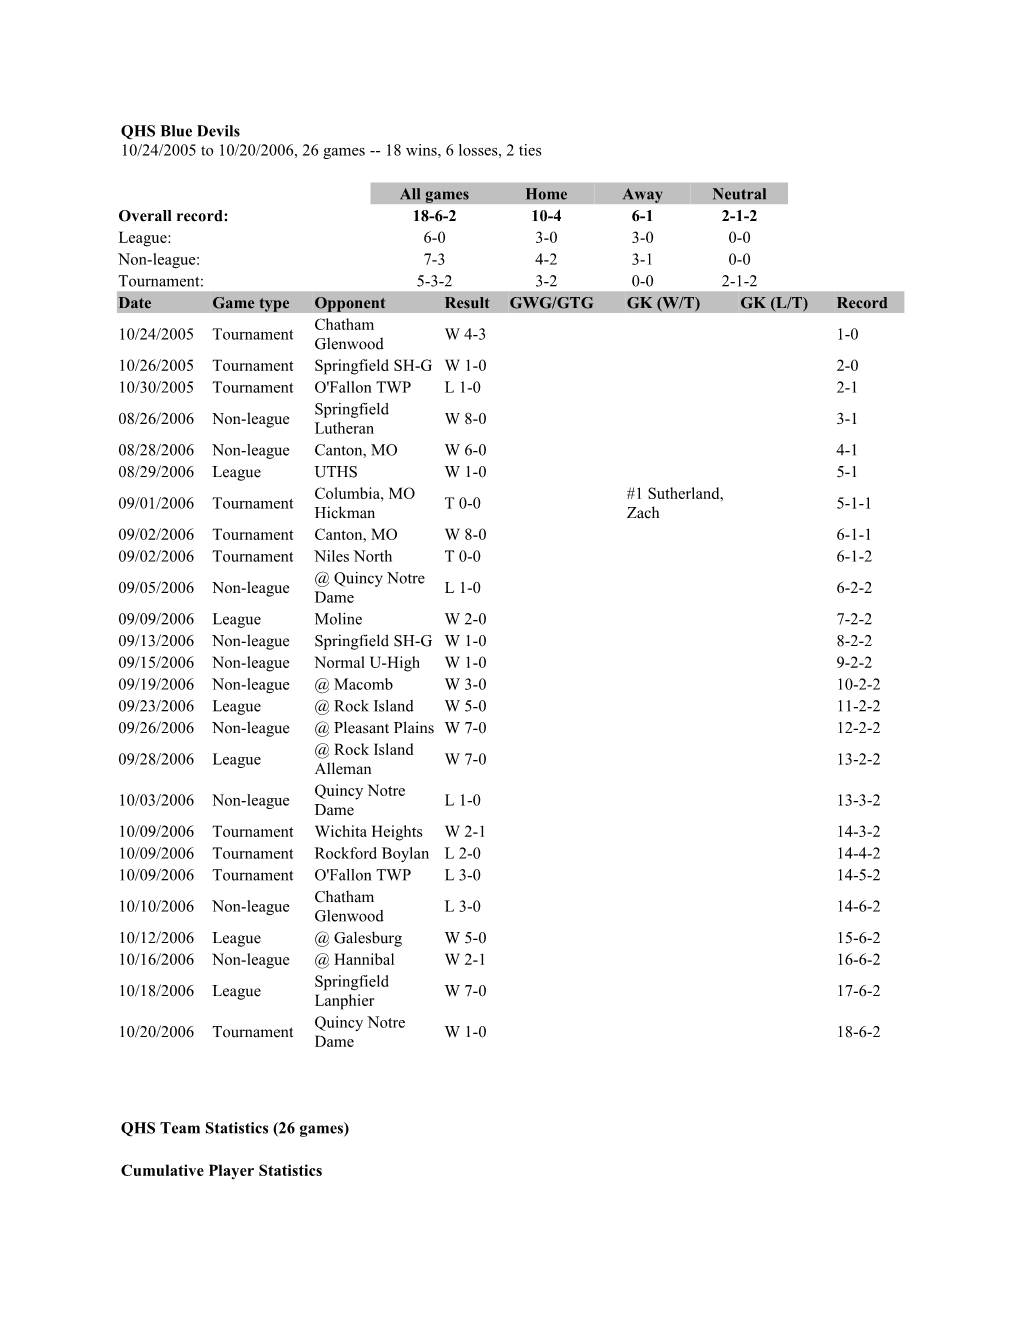 QHS Team Statistics (26 Games)